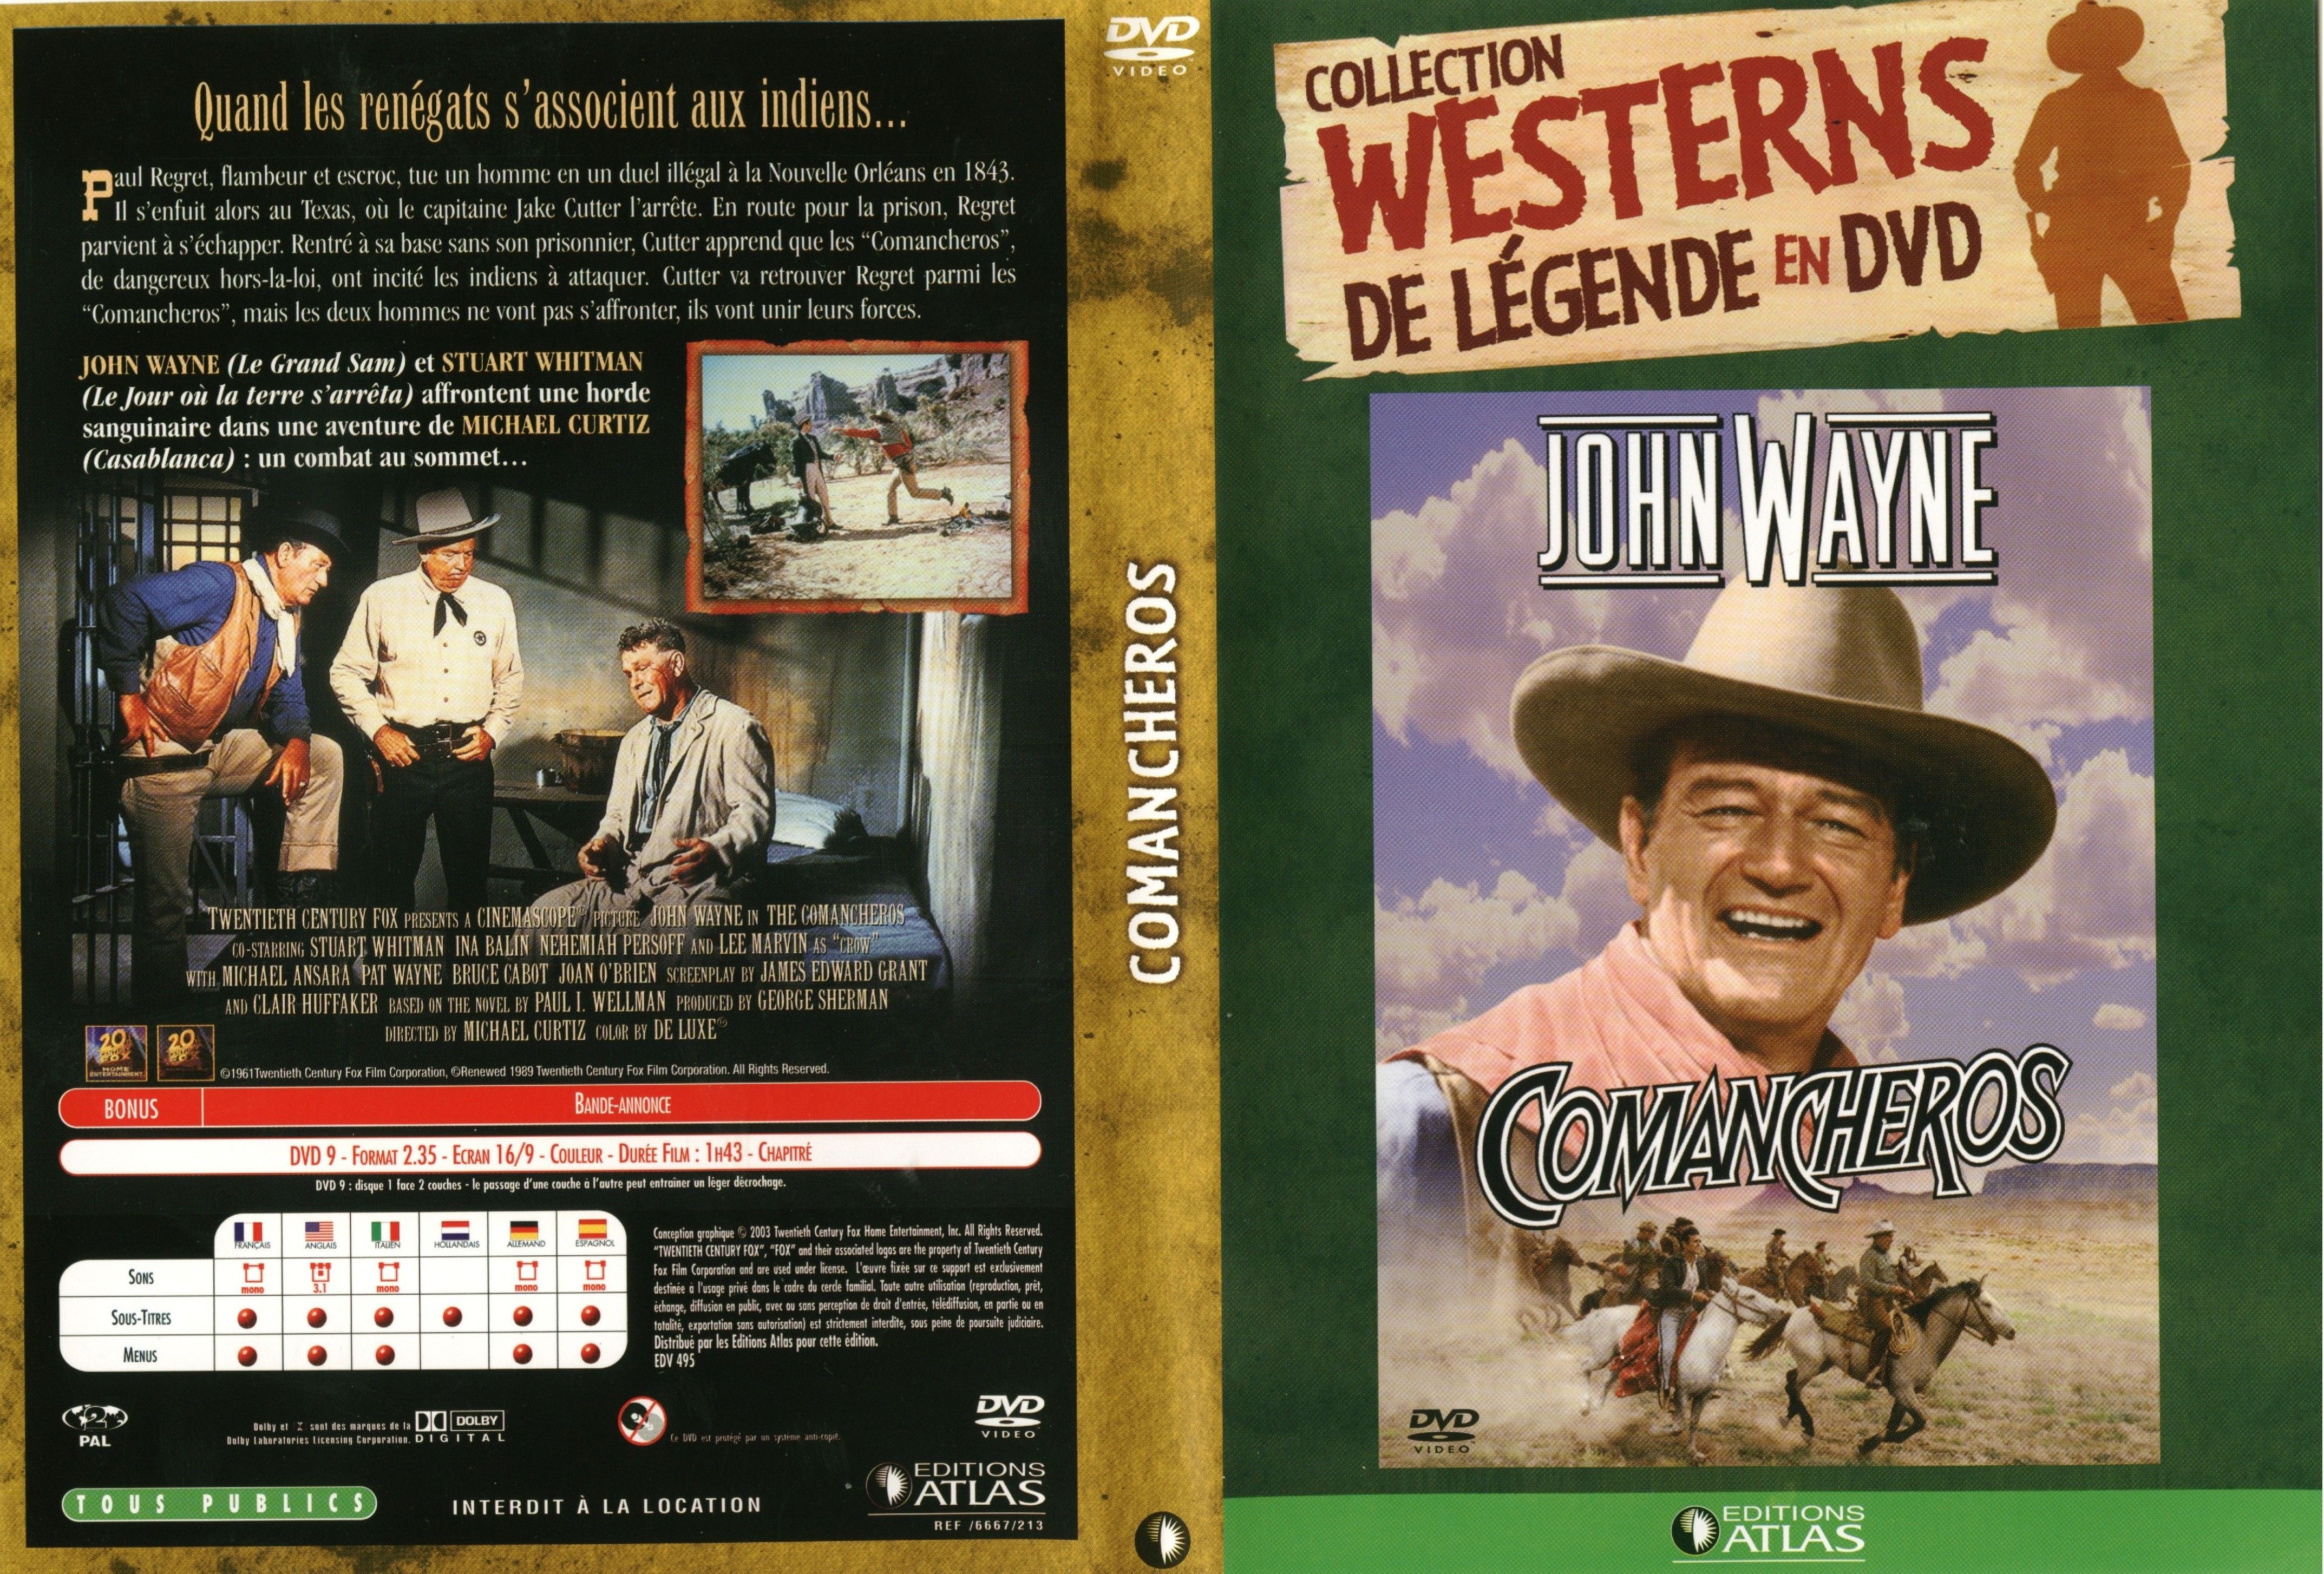 Jaquette DVD Comancheros v2